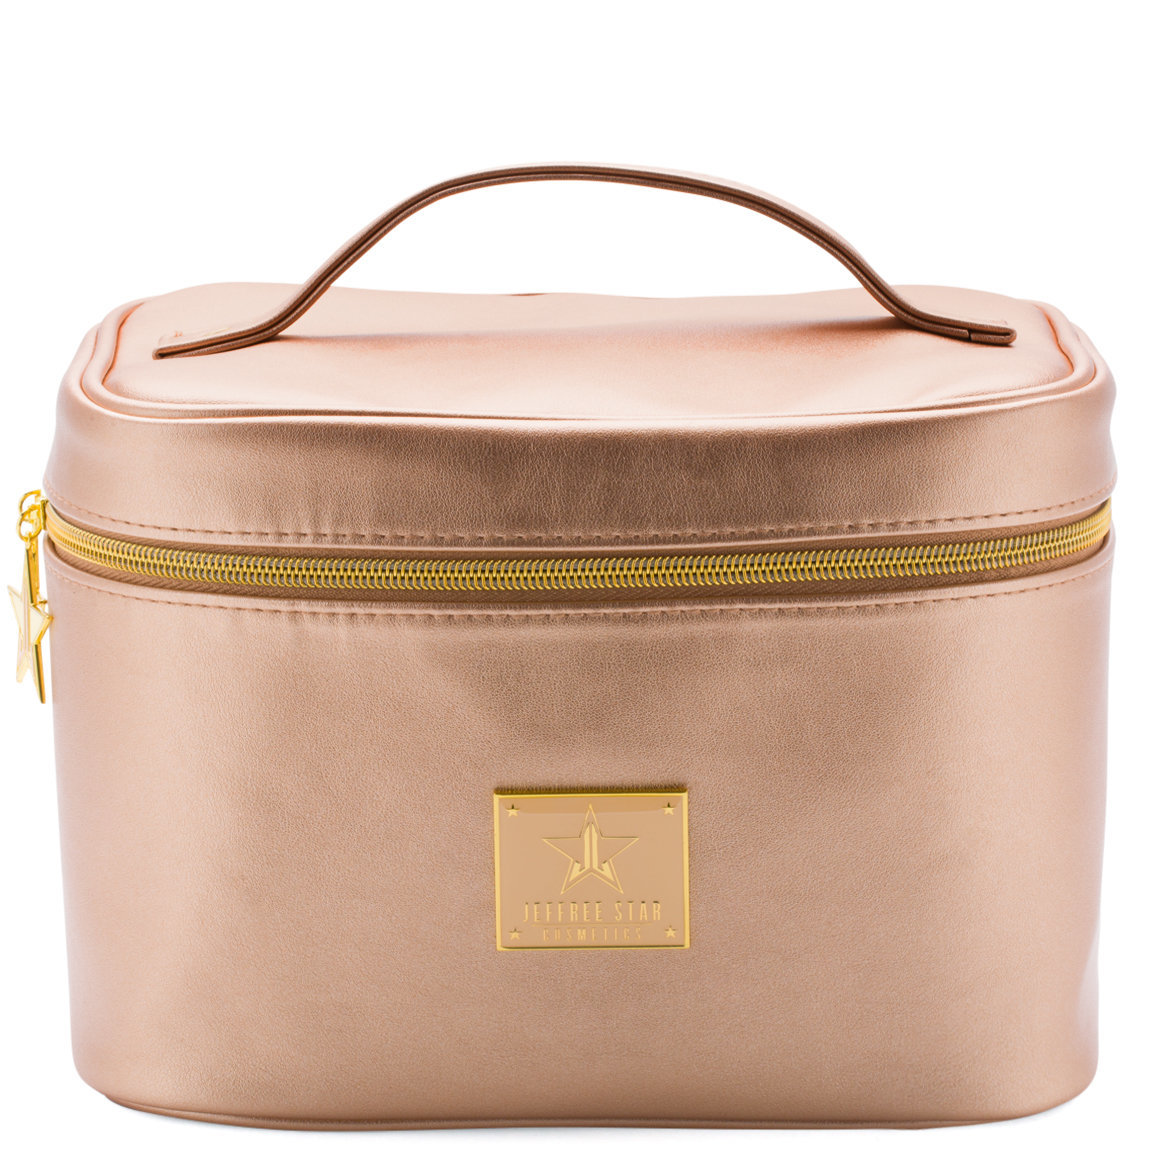 Jeffree Star Cosmetics Travel Makeup Bag Rose Gold | Beautylish